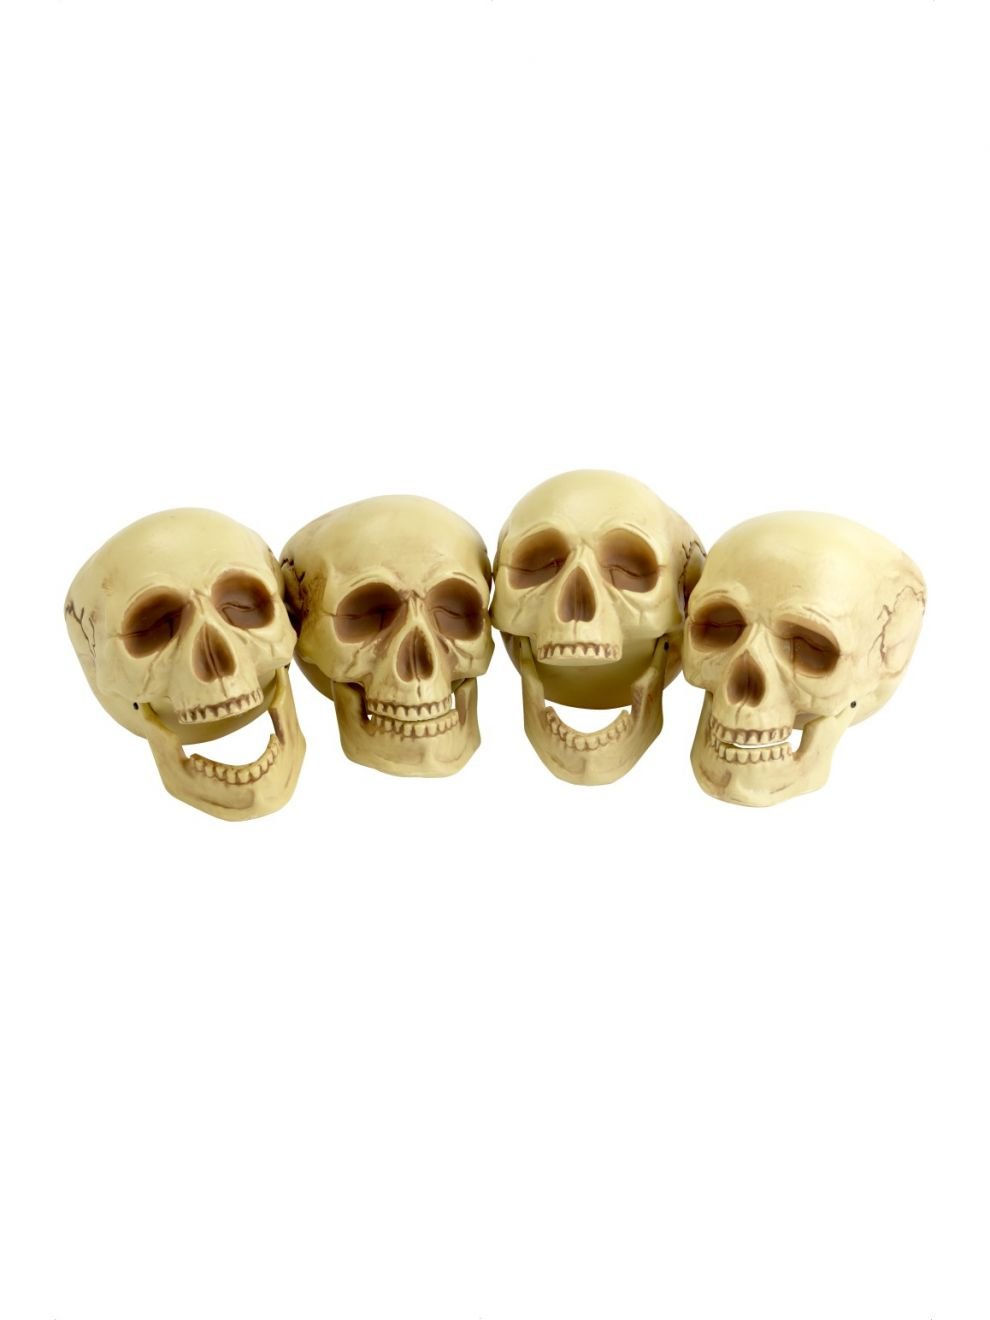 Skull Heads- 4 Piece Set 16cm Tall